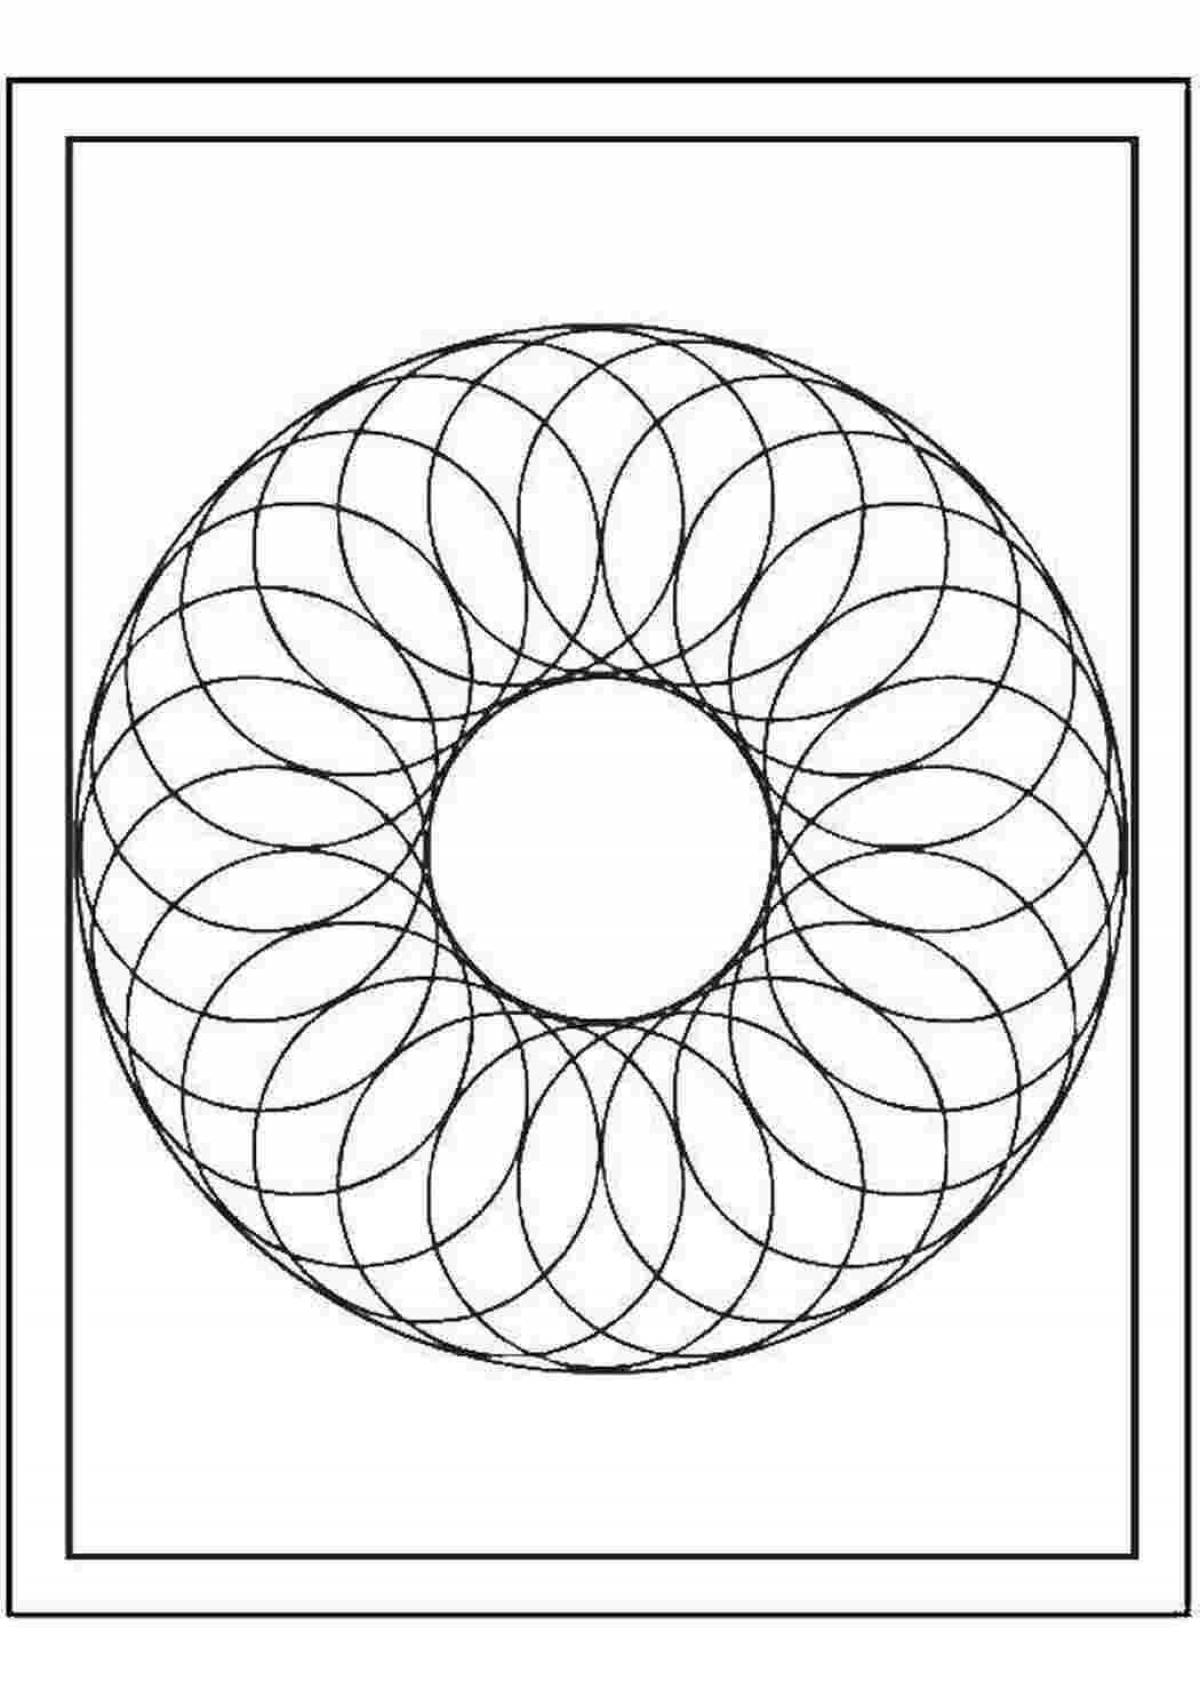 Fun round spiral coloring book